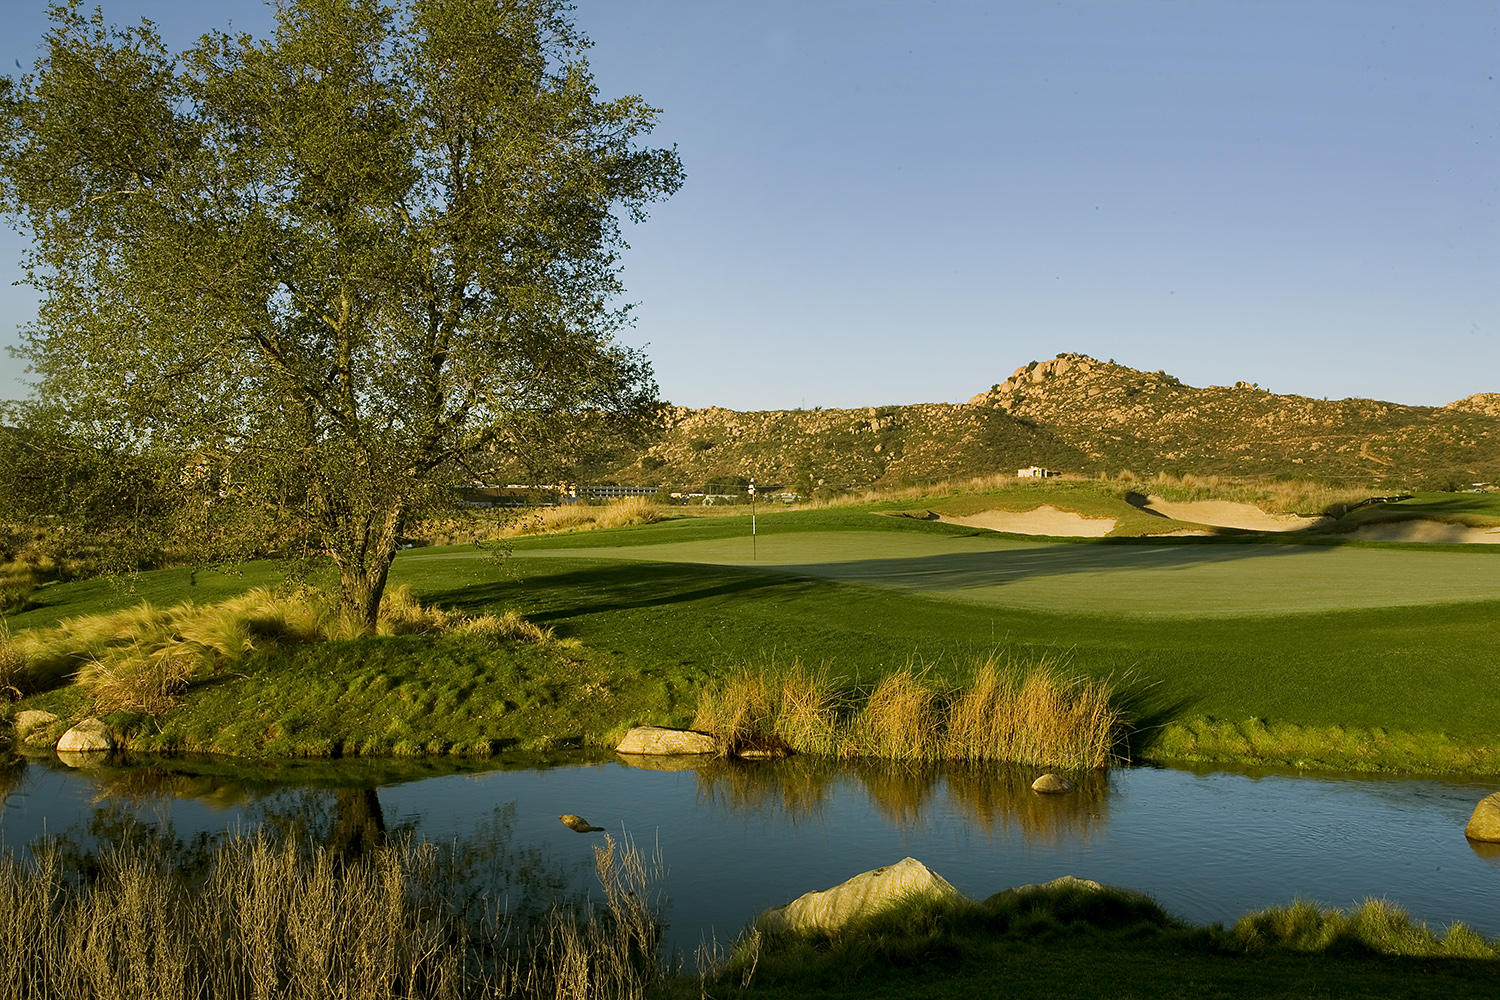 Barona Creek Golf Club
No 17, Lakeside, CA.